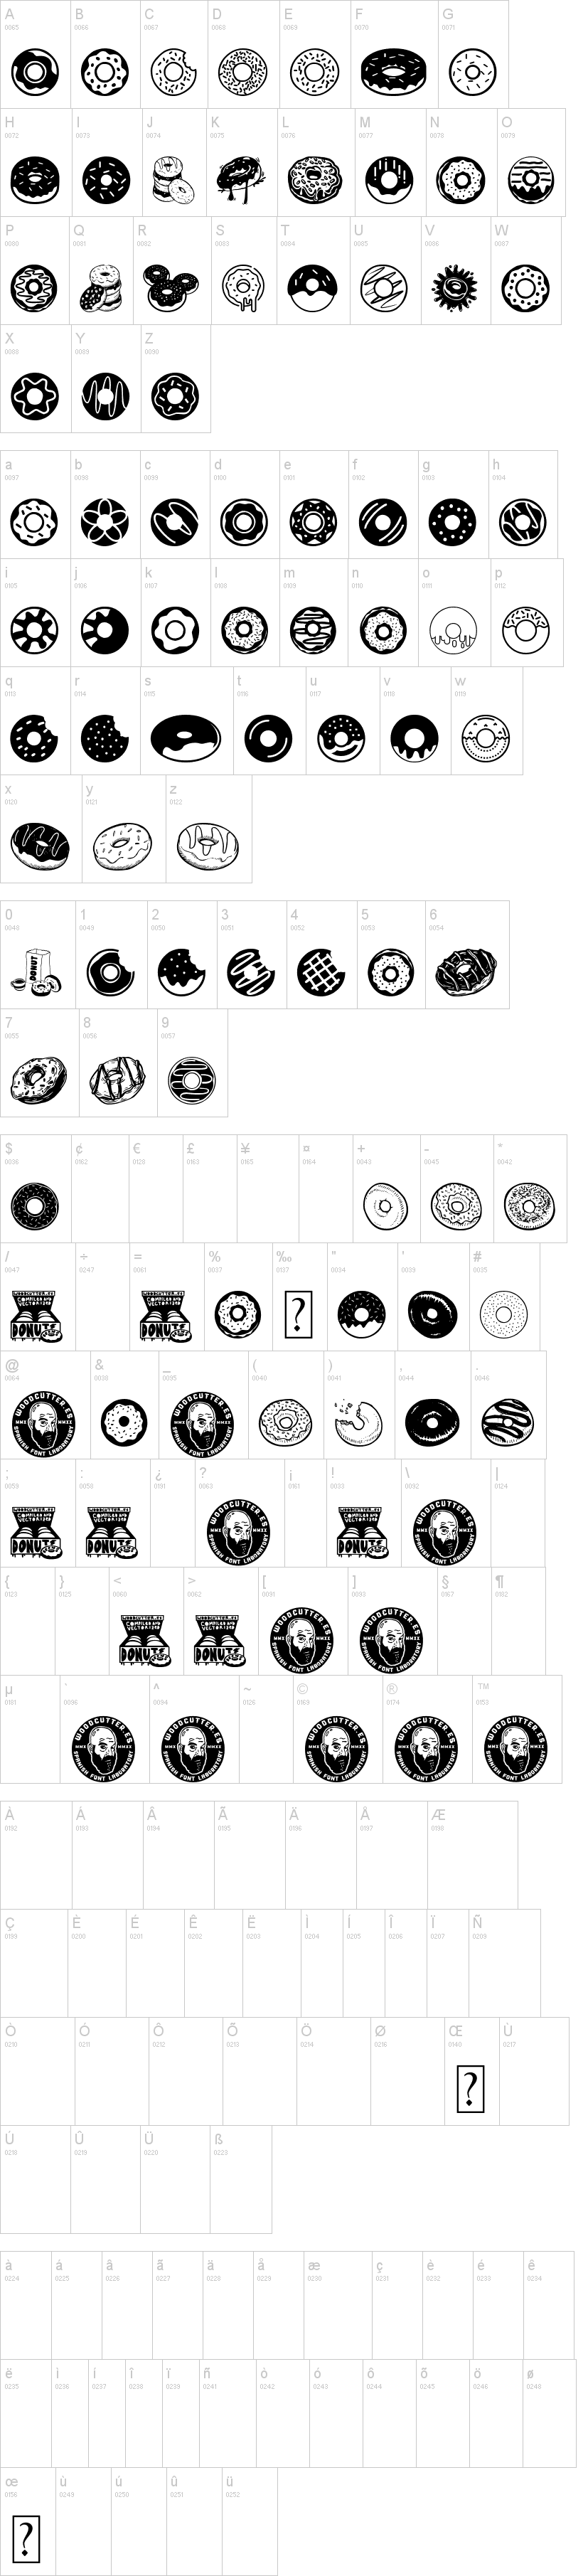 Donuts Icons字符映射图